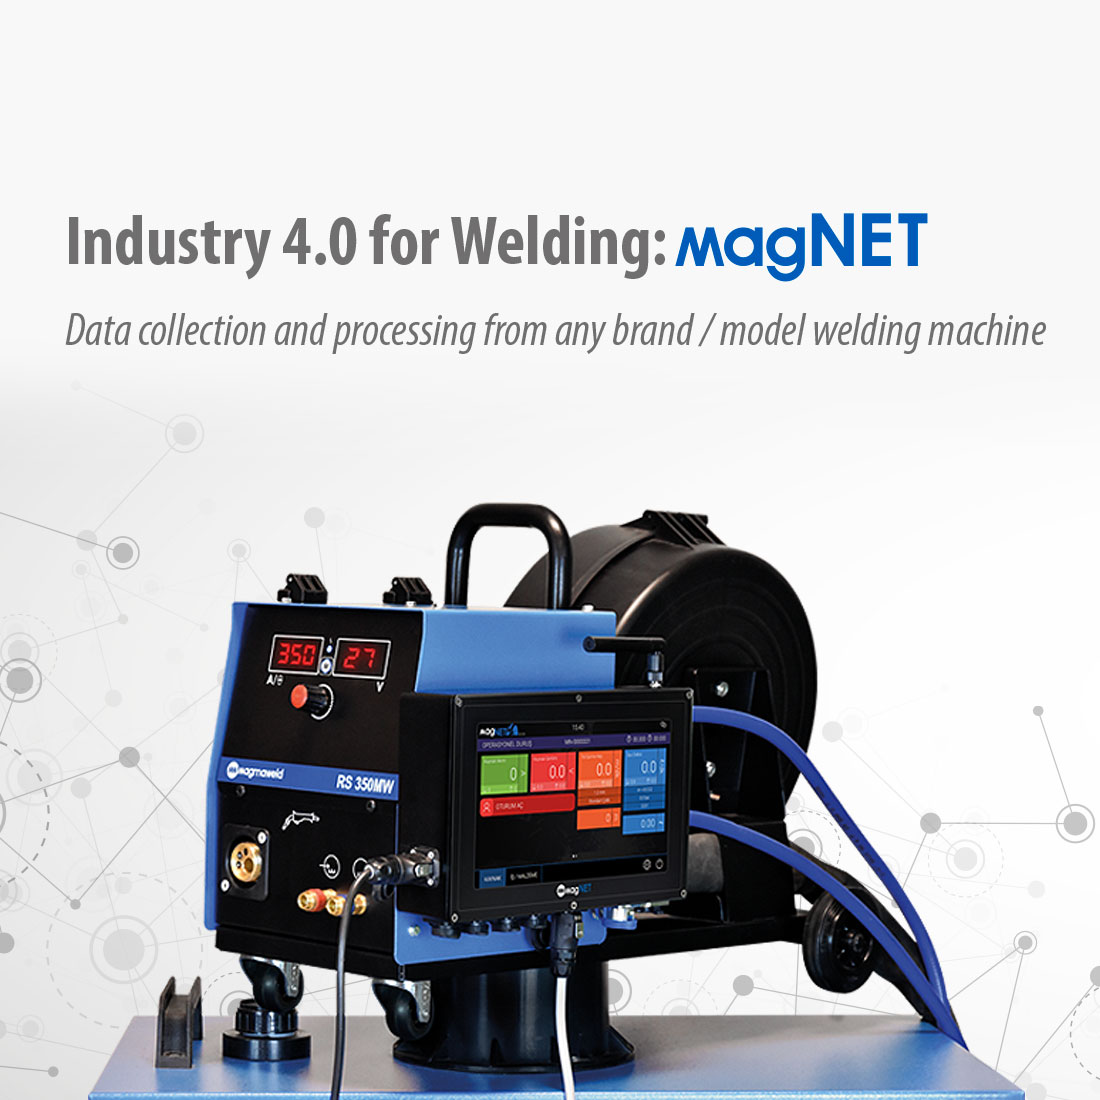 Industry 4.0 for Welding: magNET